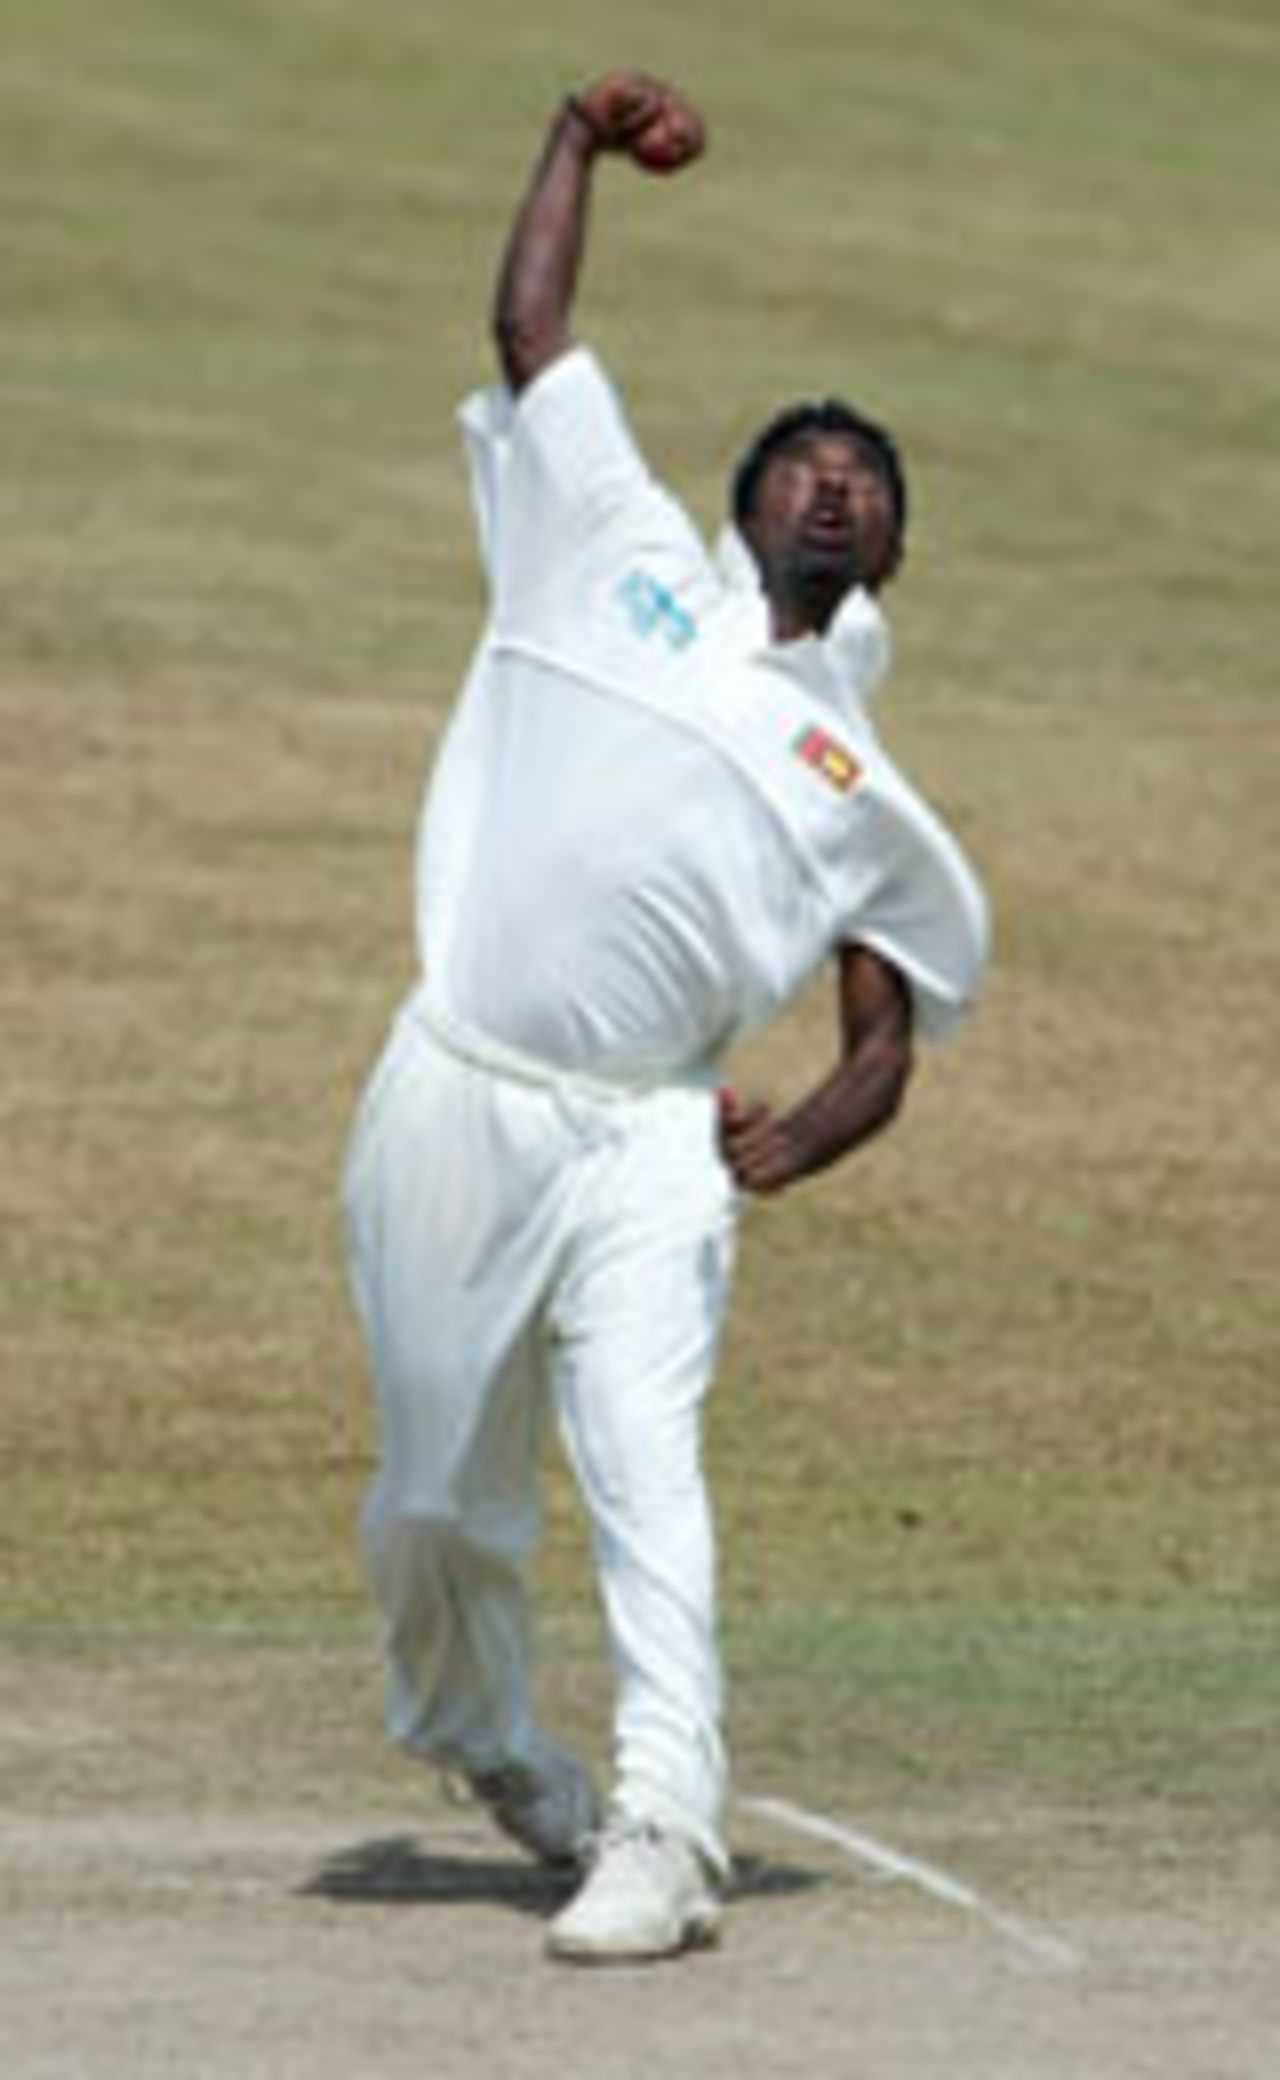 Muttiah Muralitharan bowling, Sri Lanka v England, December 14, Kandy, 2003